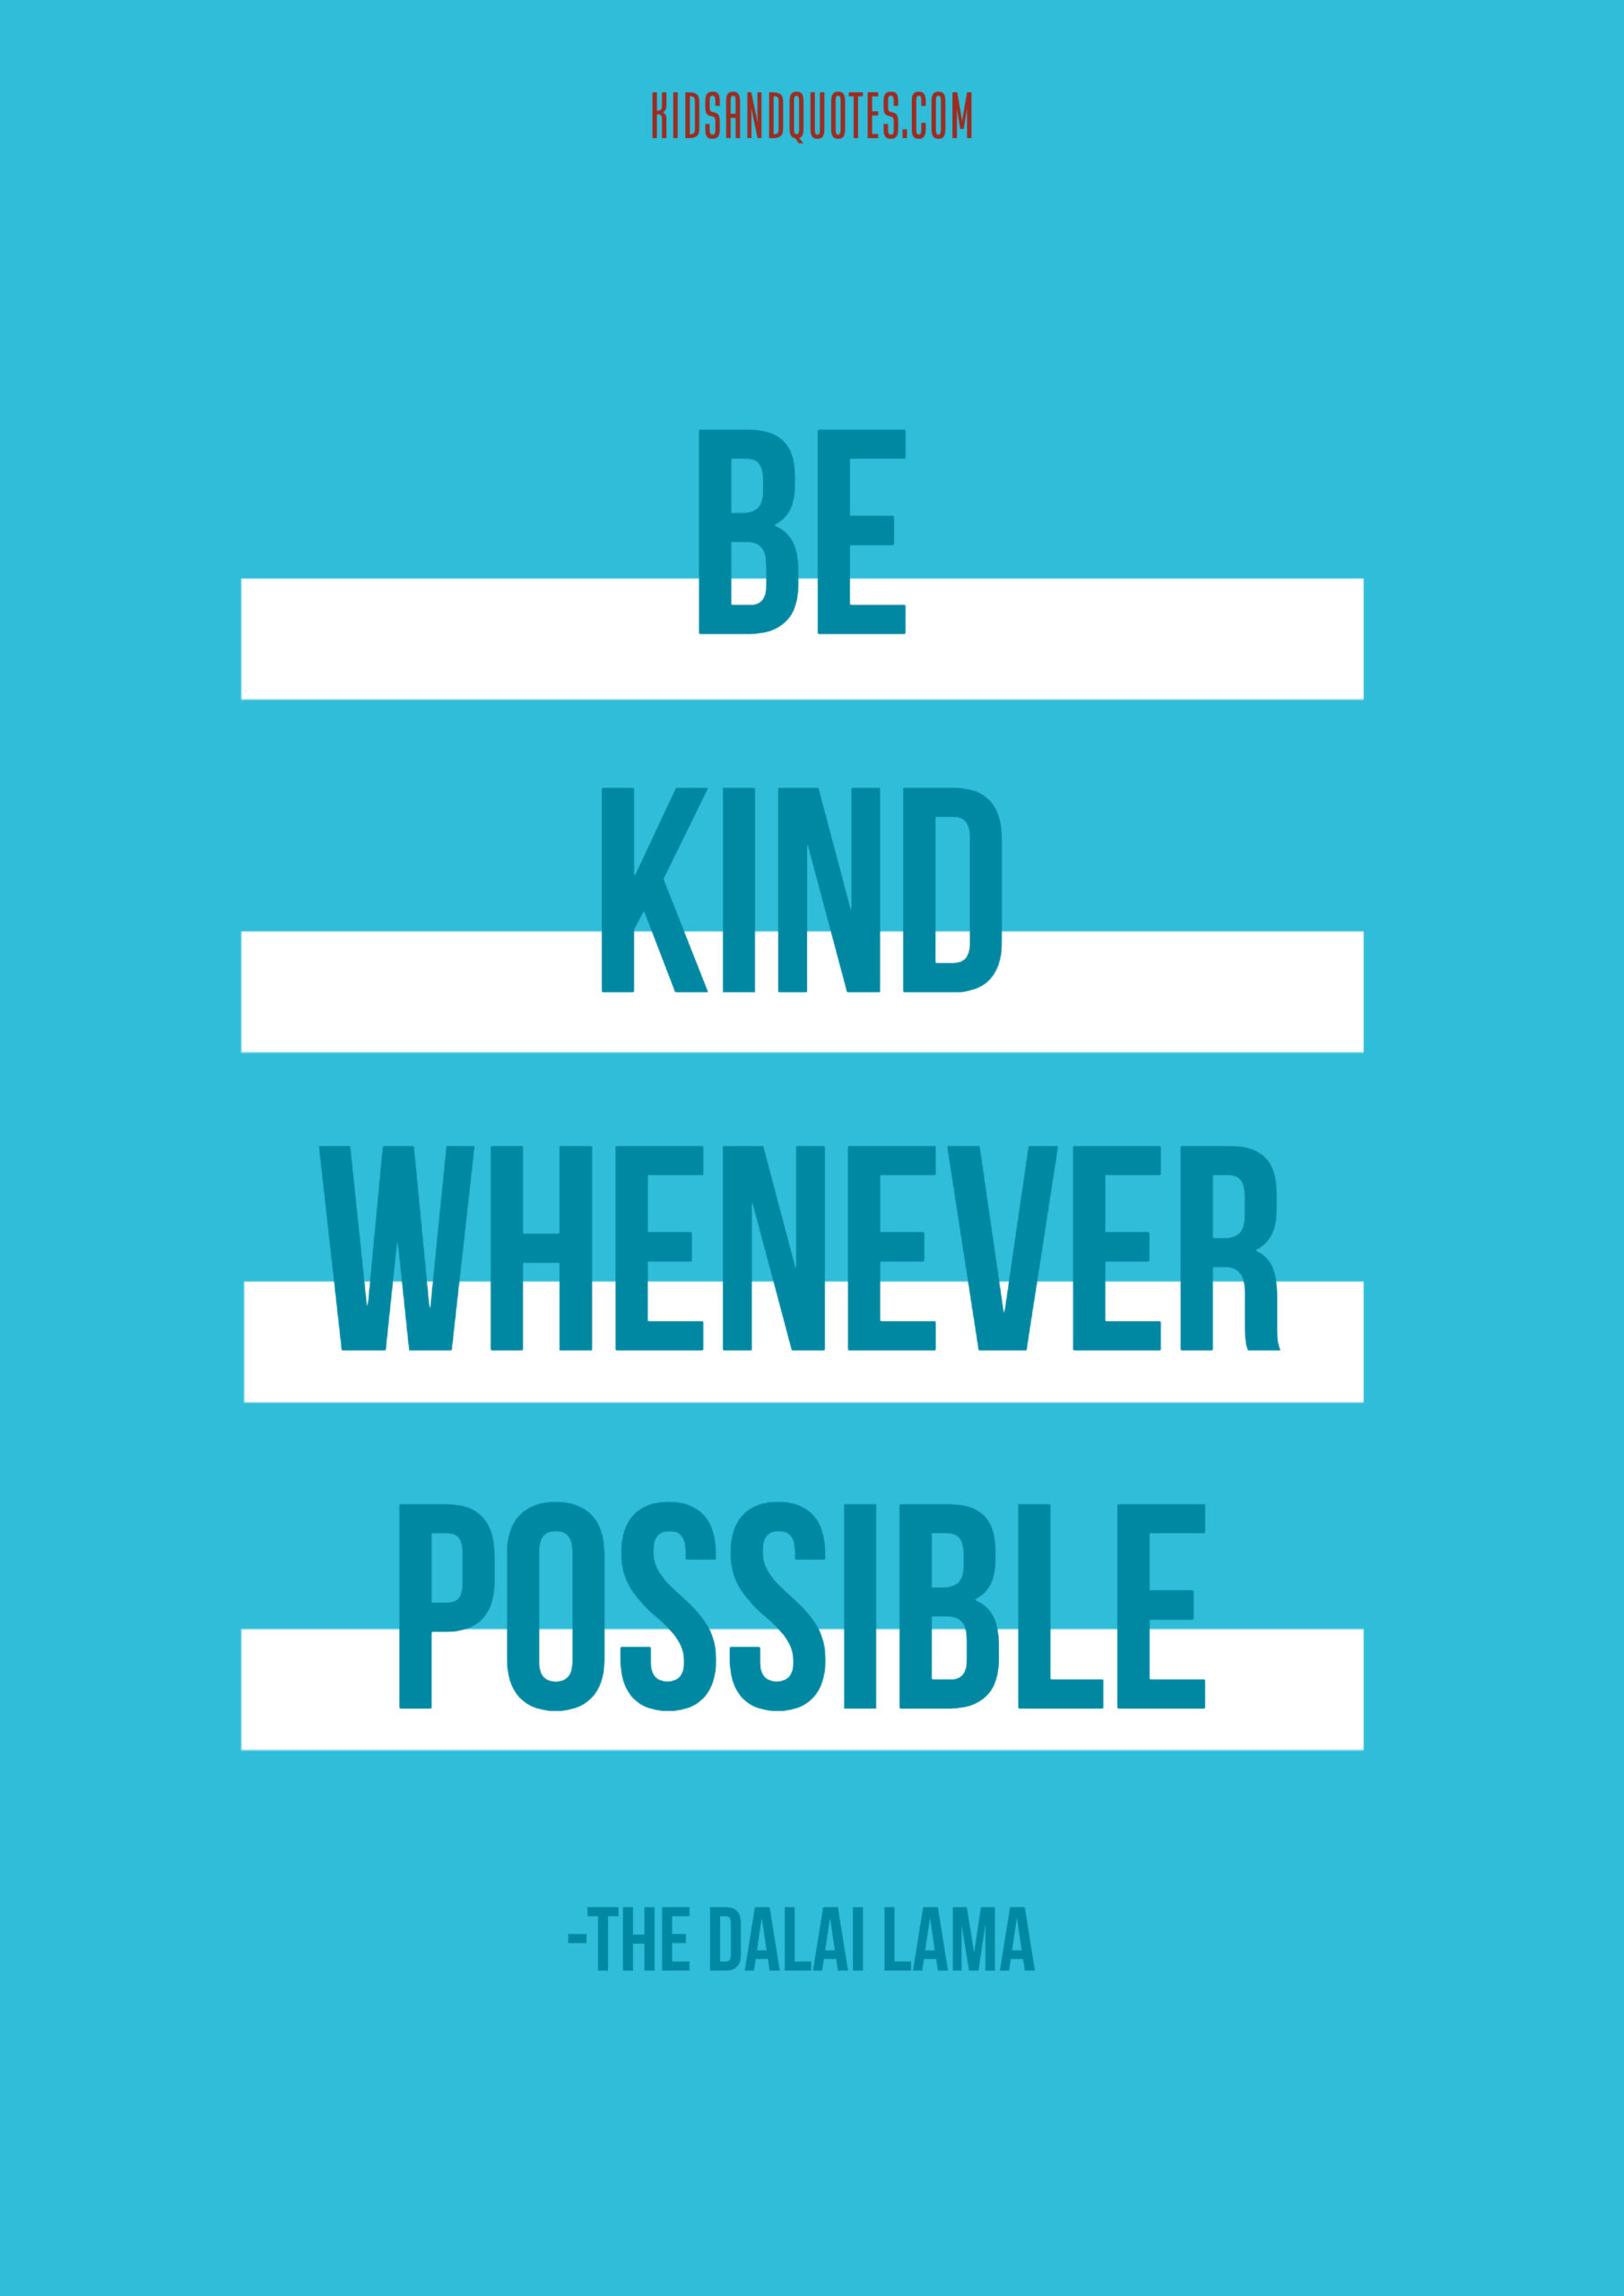 Be kind whenever possible - The Dalai Lama